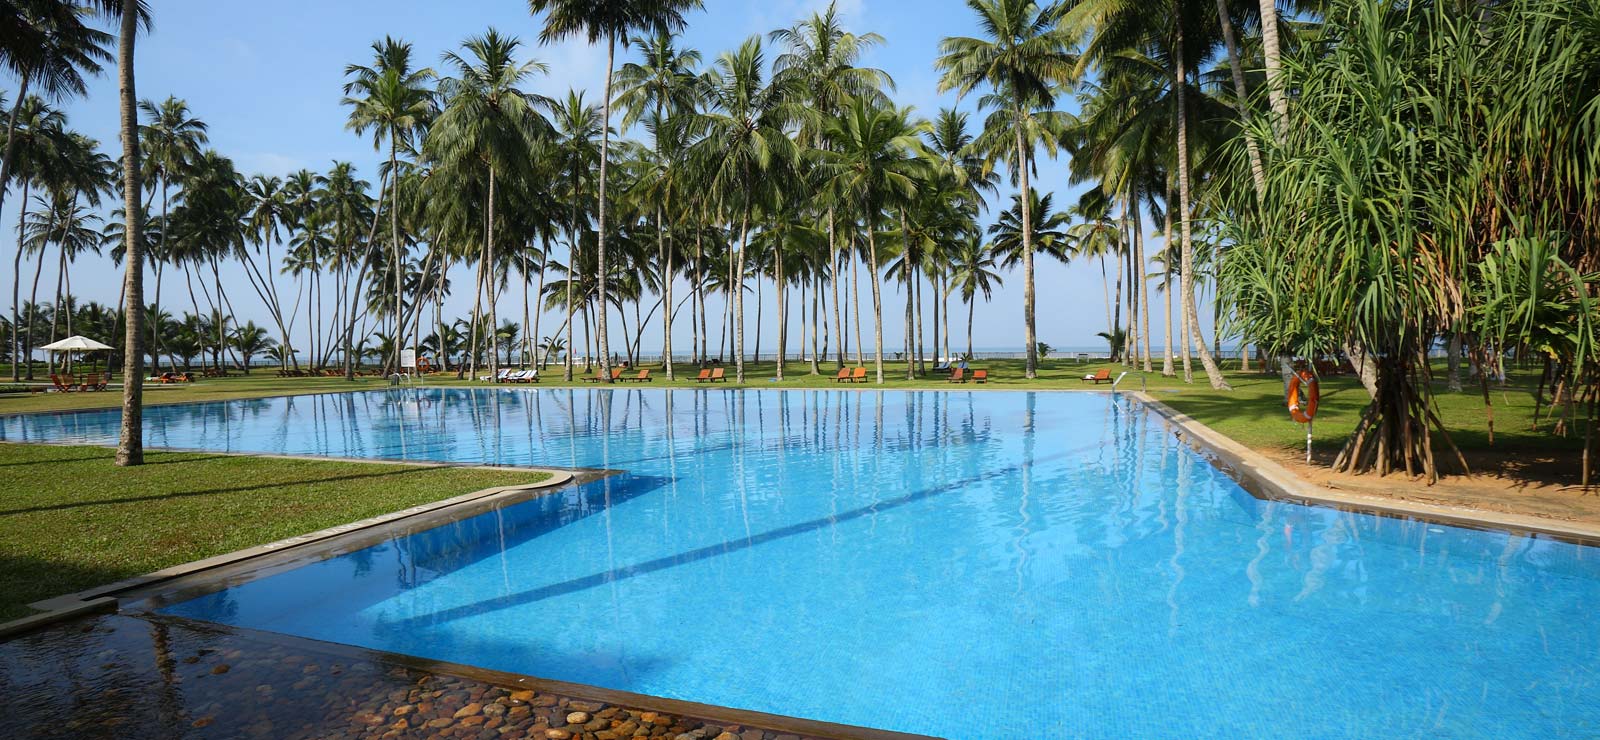 Hotels in Sri Lanka - The Blue Water